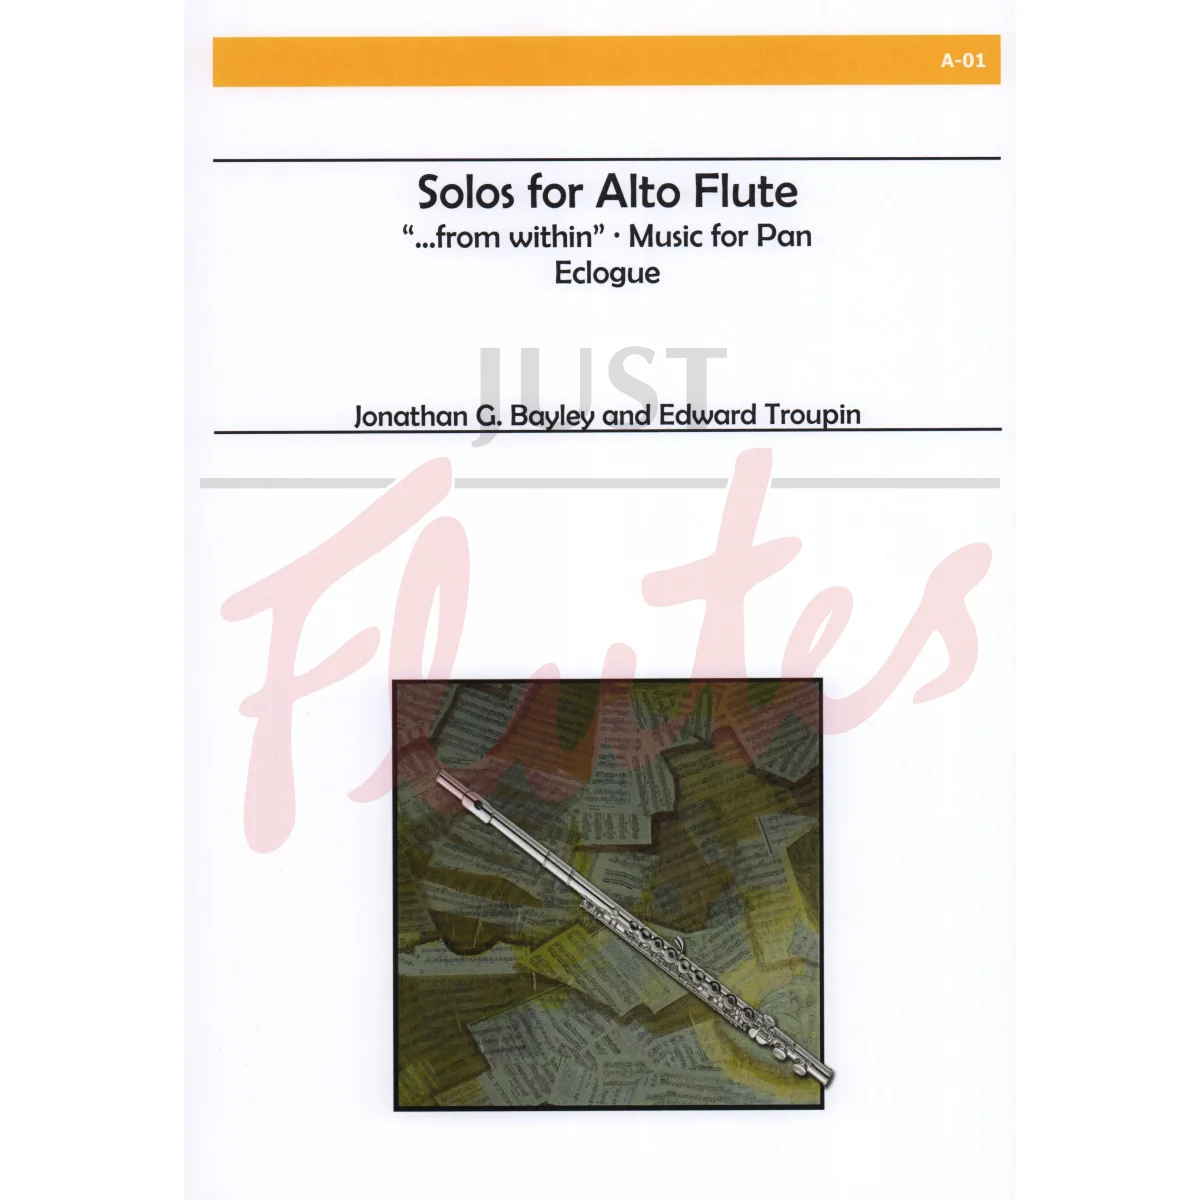 Solos for Alto Flute